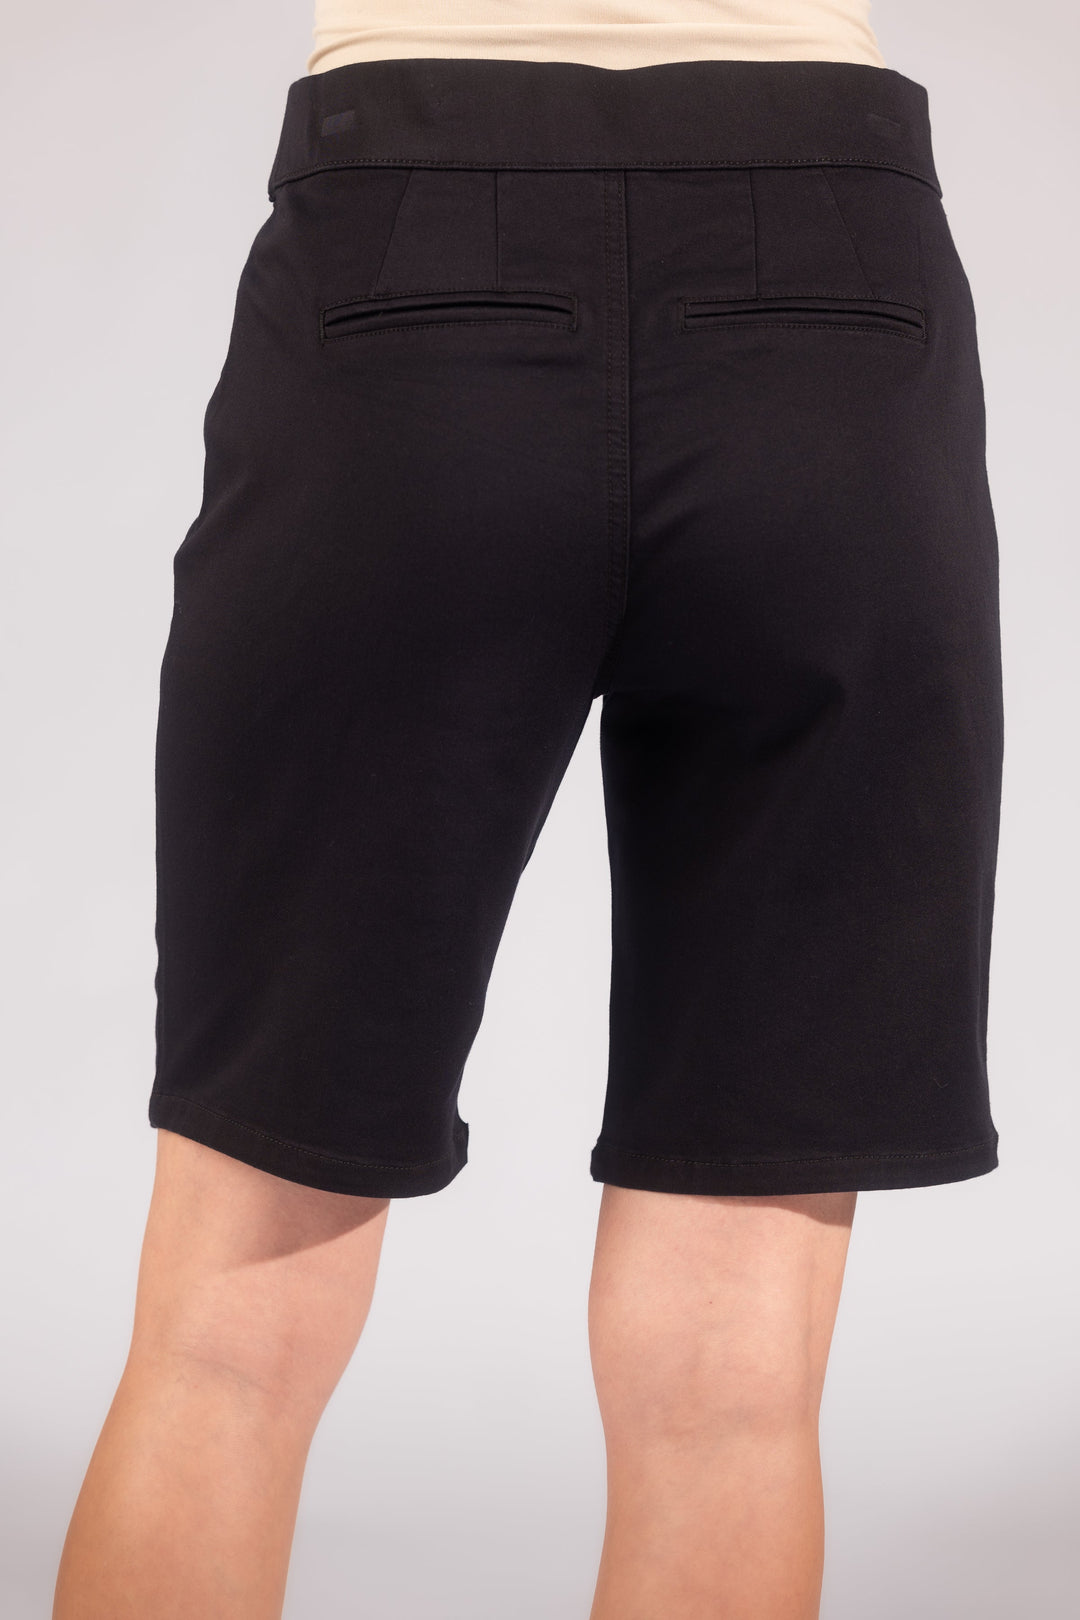 Daisy Stretch Pull-On Shorts